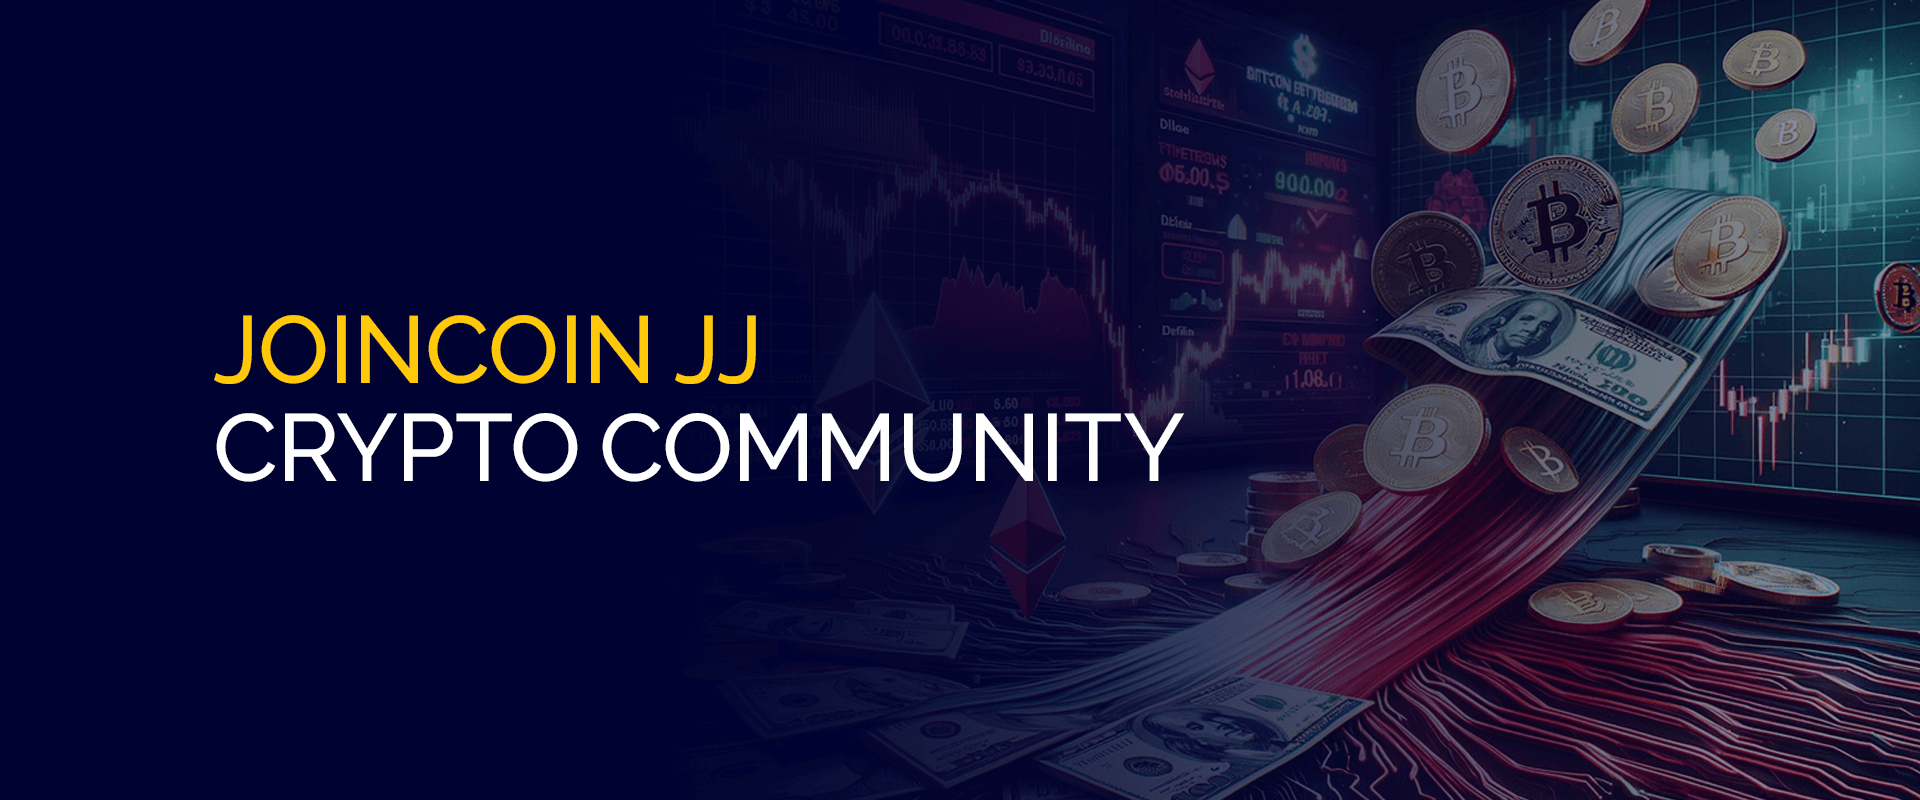 Joincoin JJ Crypto Community